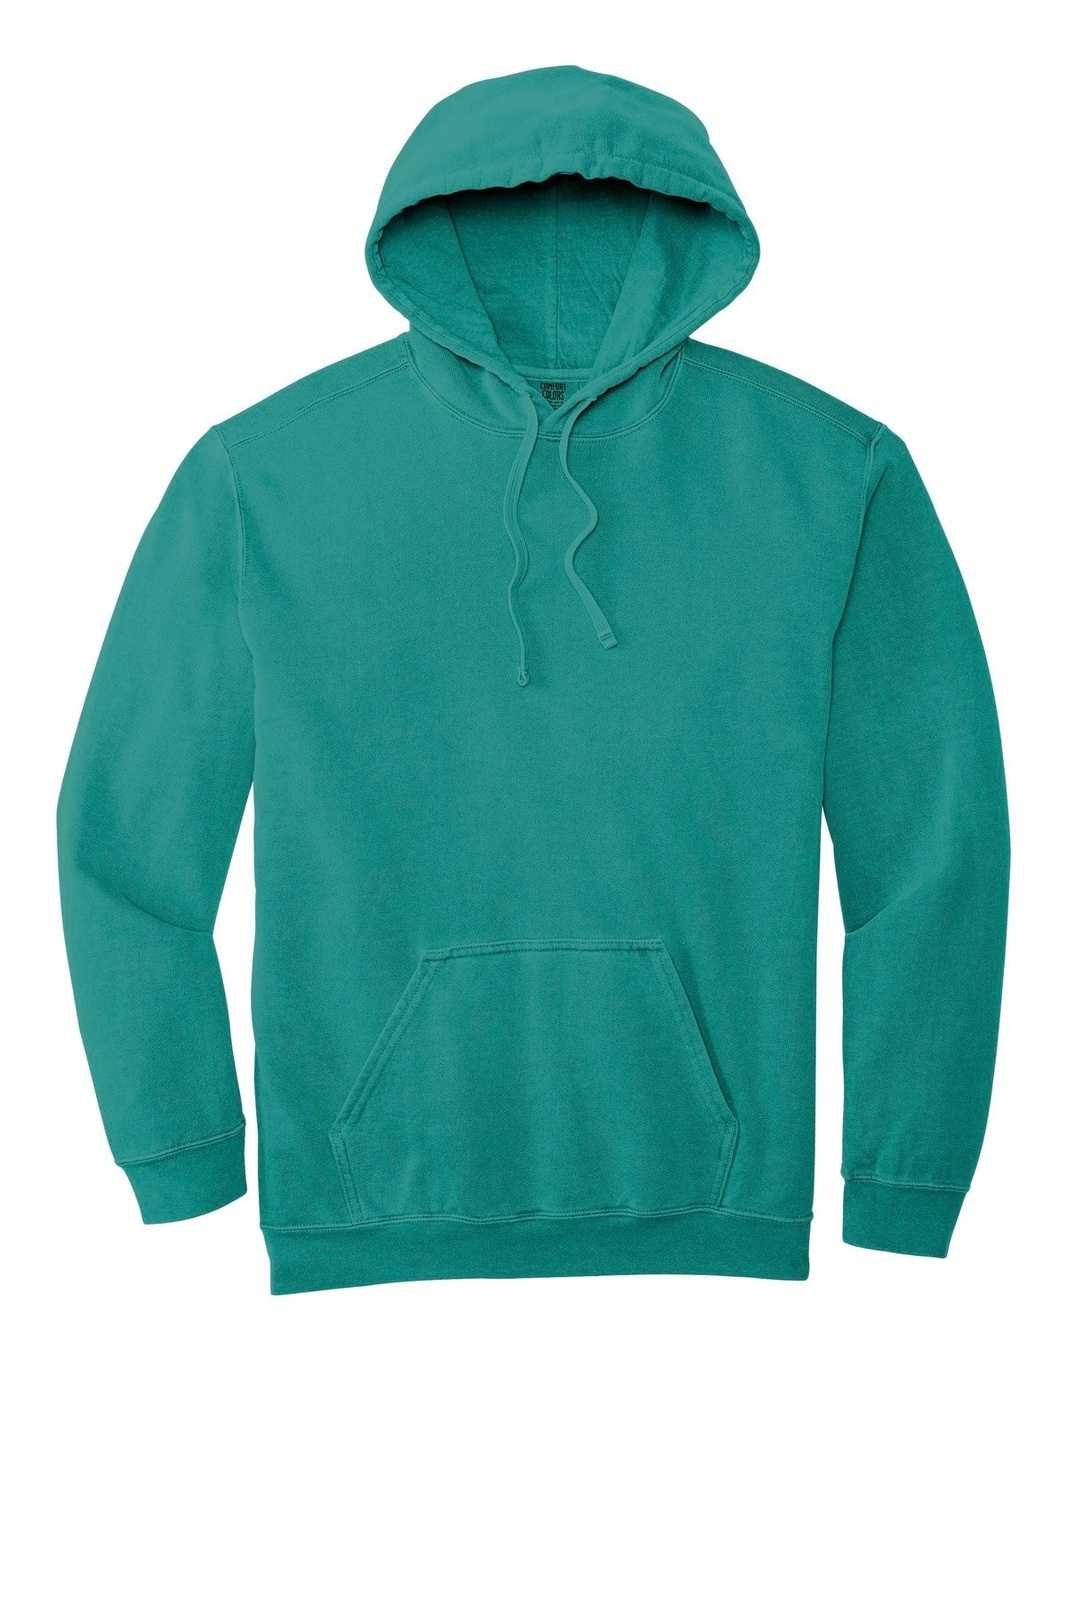 Comfort Colors 1567 Ring Spun Hooded Sweatshirt - Seafoam - HIT a Double